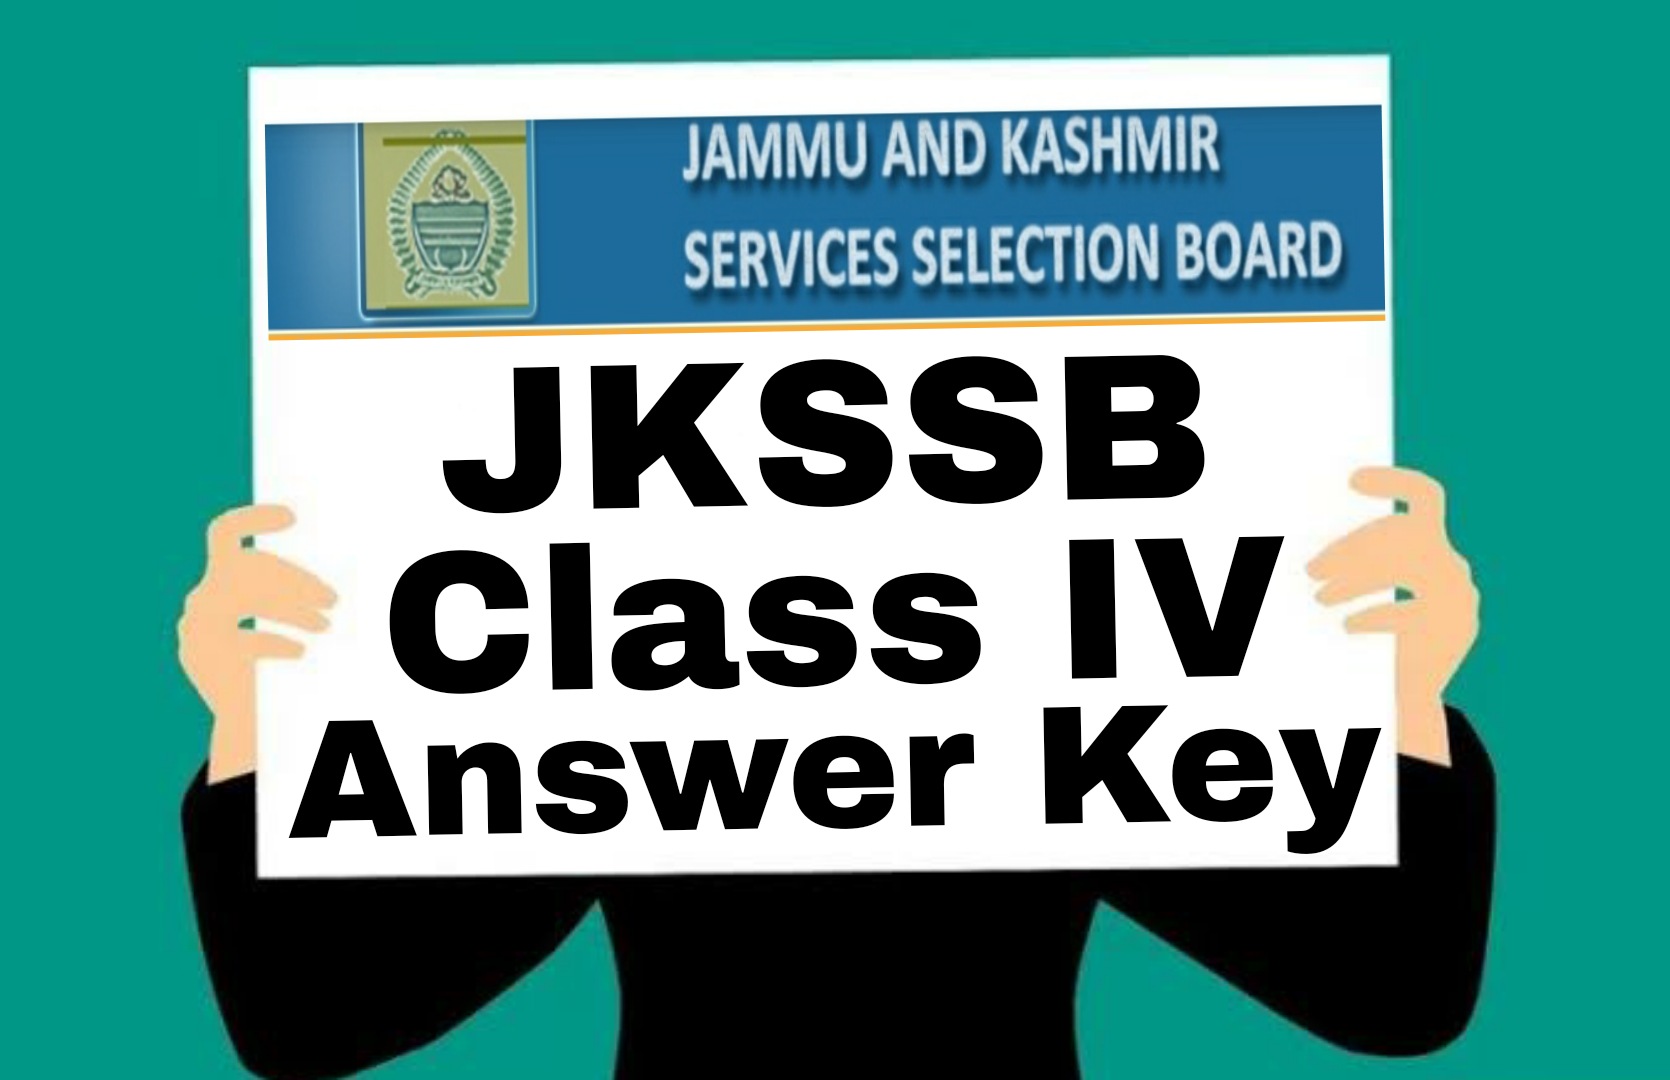 Jkssb Answer key, Answer key, class iv exam answer key,